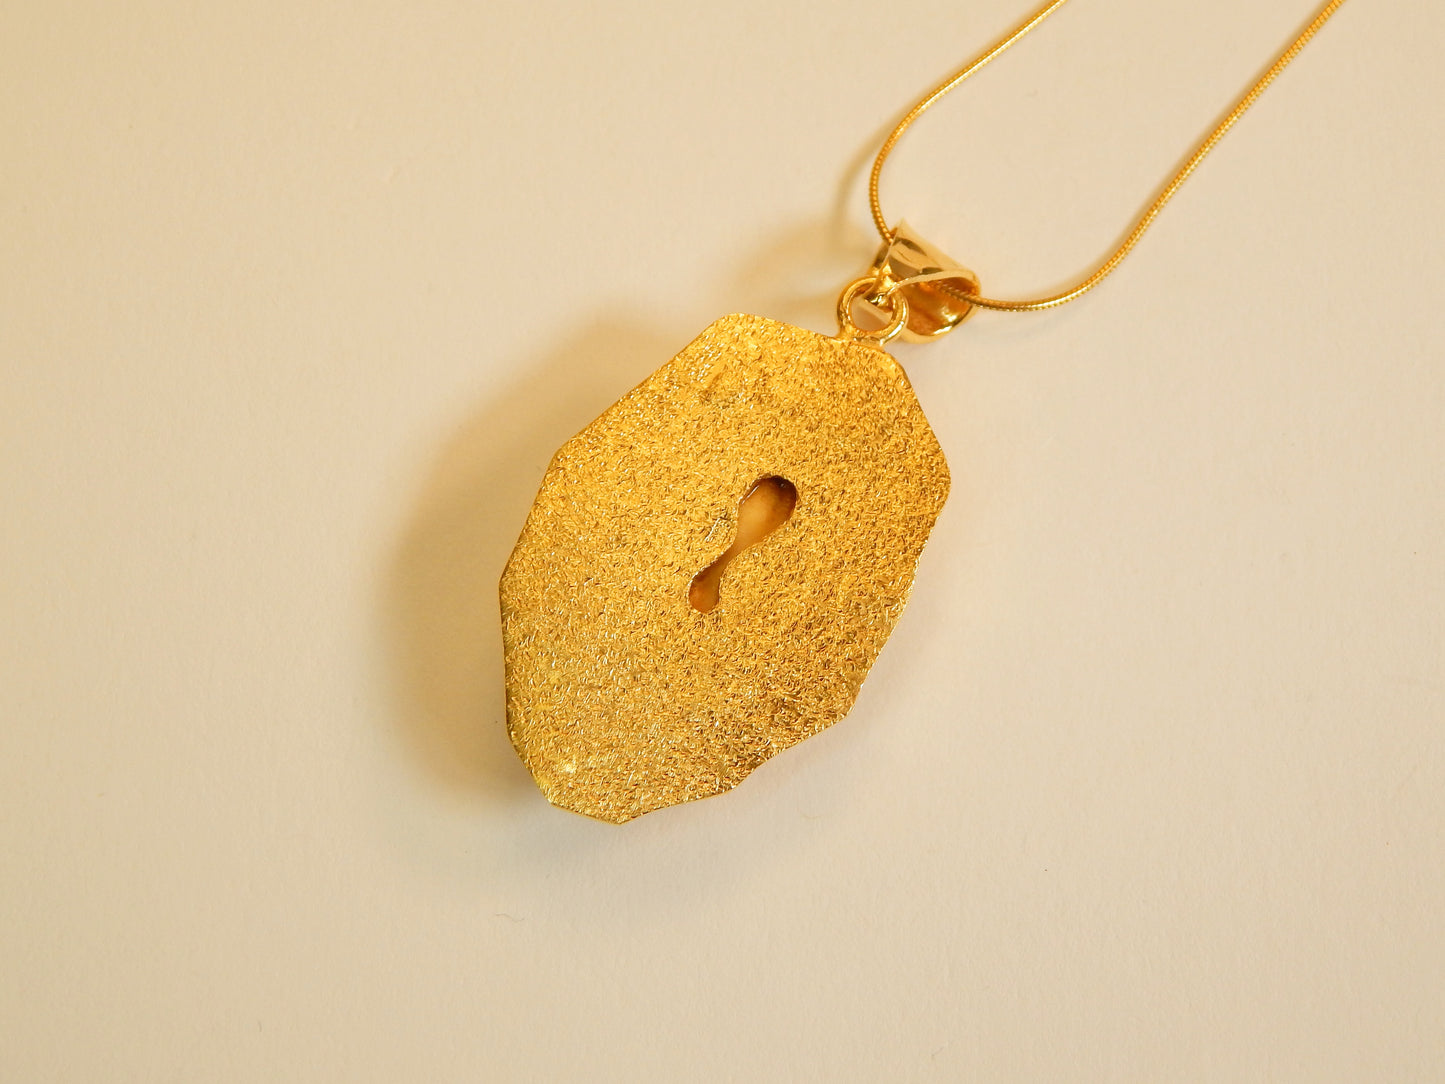 Natural Baltic Rare White Amber 14k Gold Plated Handmade Designer Necklace